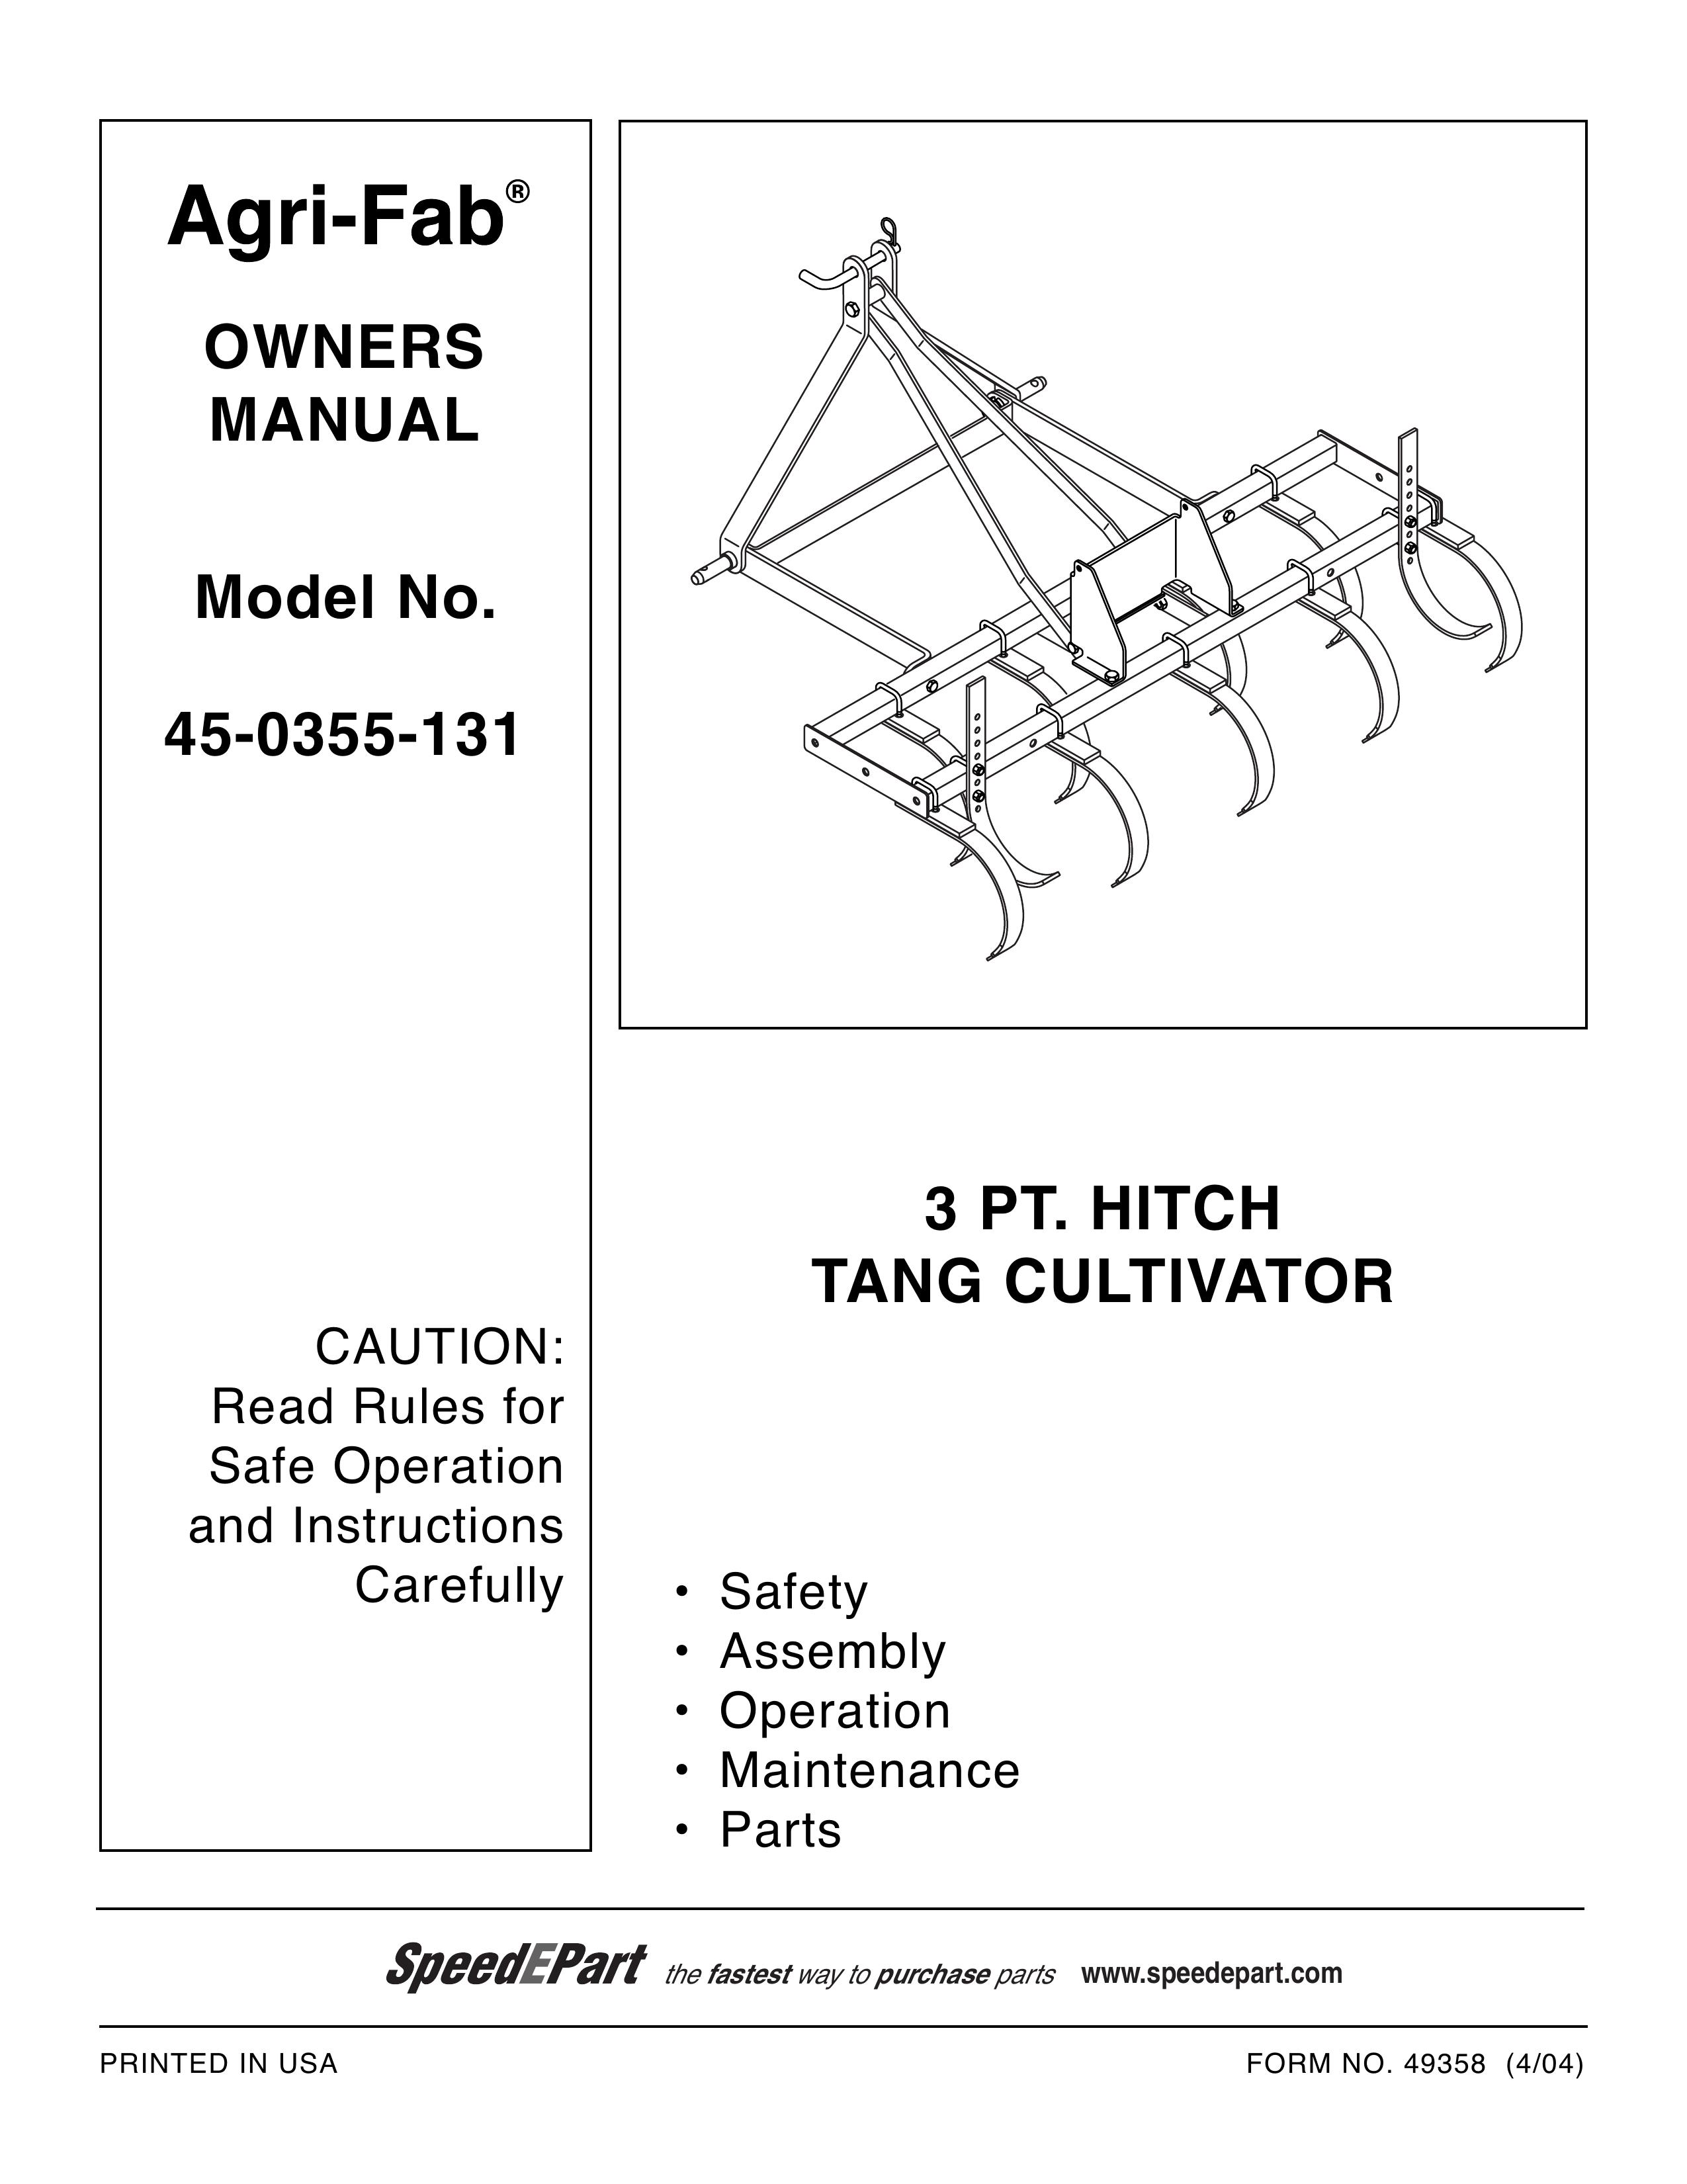 Agri-Fab 45-0355-131 Cultivator User Manual